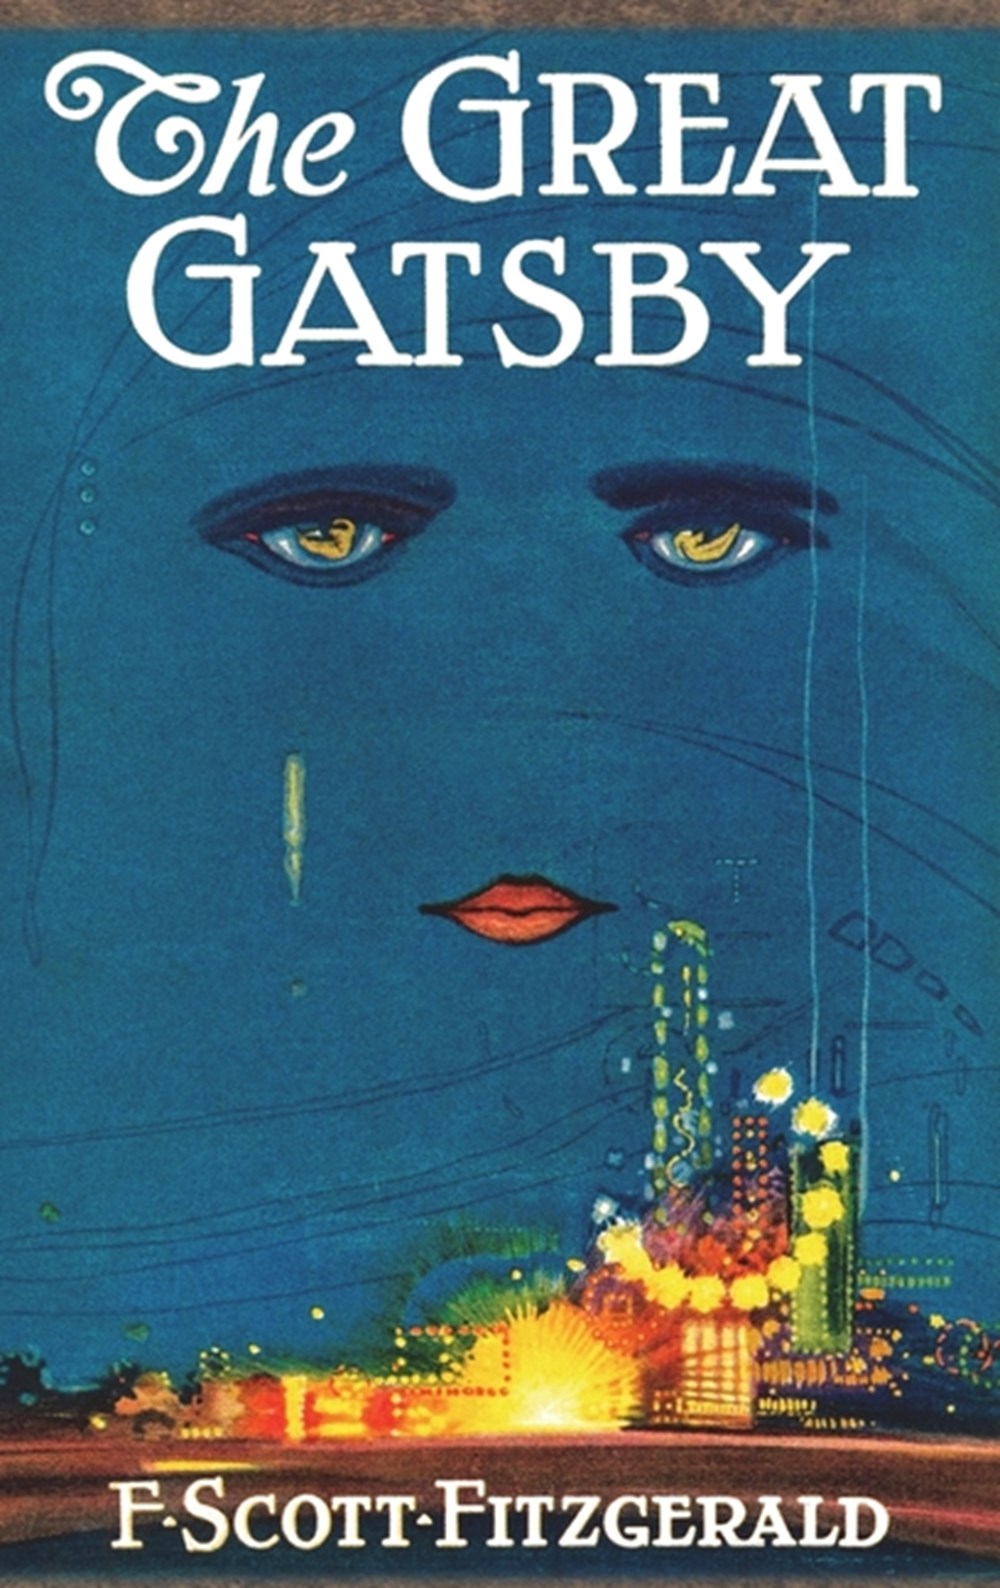 Great Gatsby: Original 1925 Edition